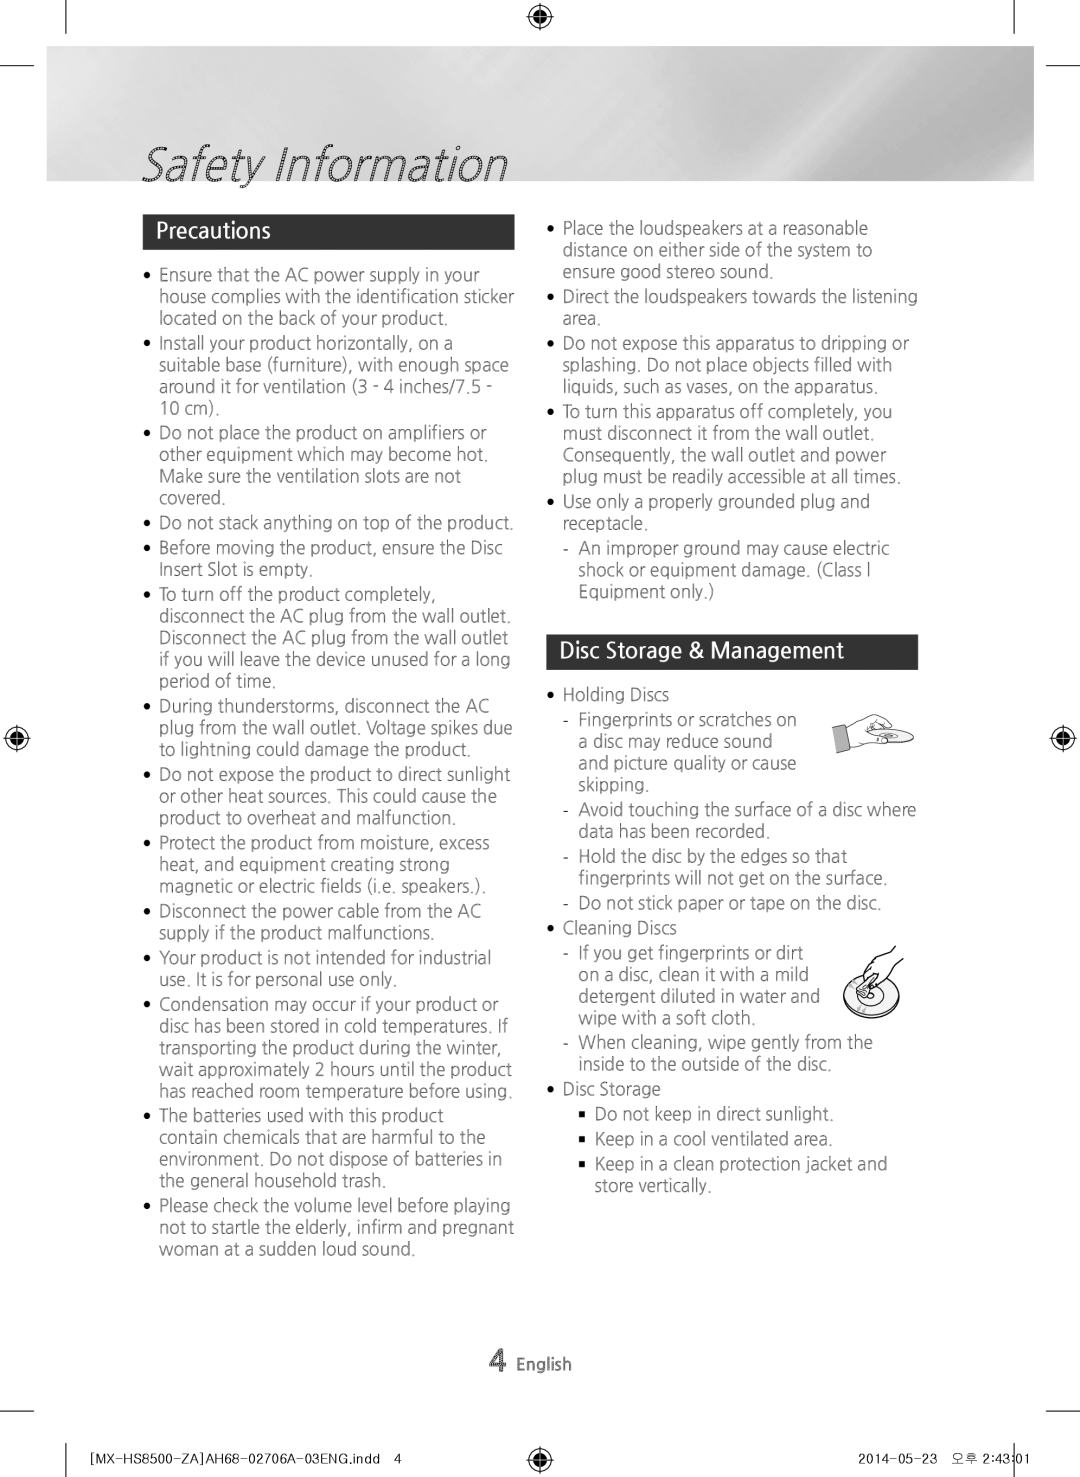 Samsung MX-HS8500 user manual Precautions, Disc Storage & Management, Safety Information 